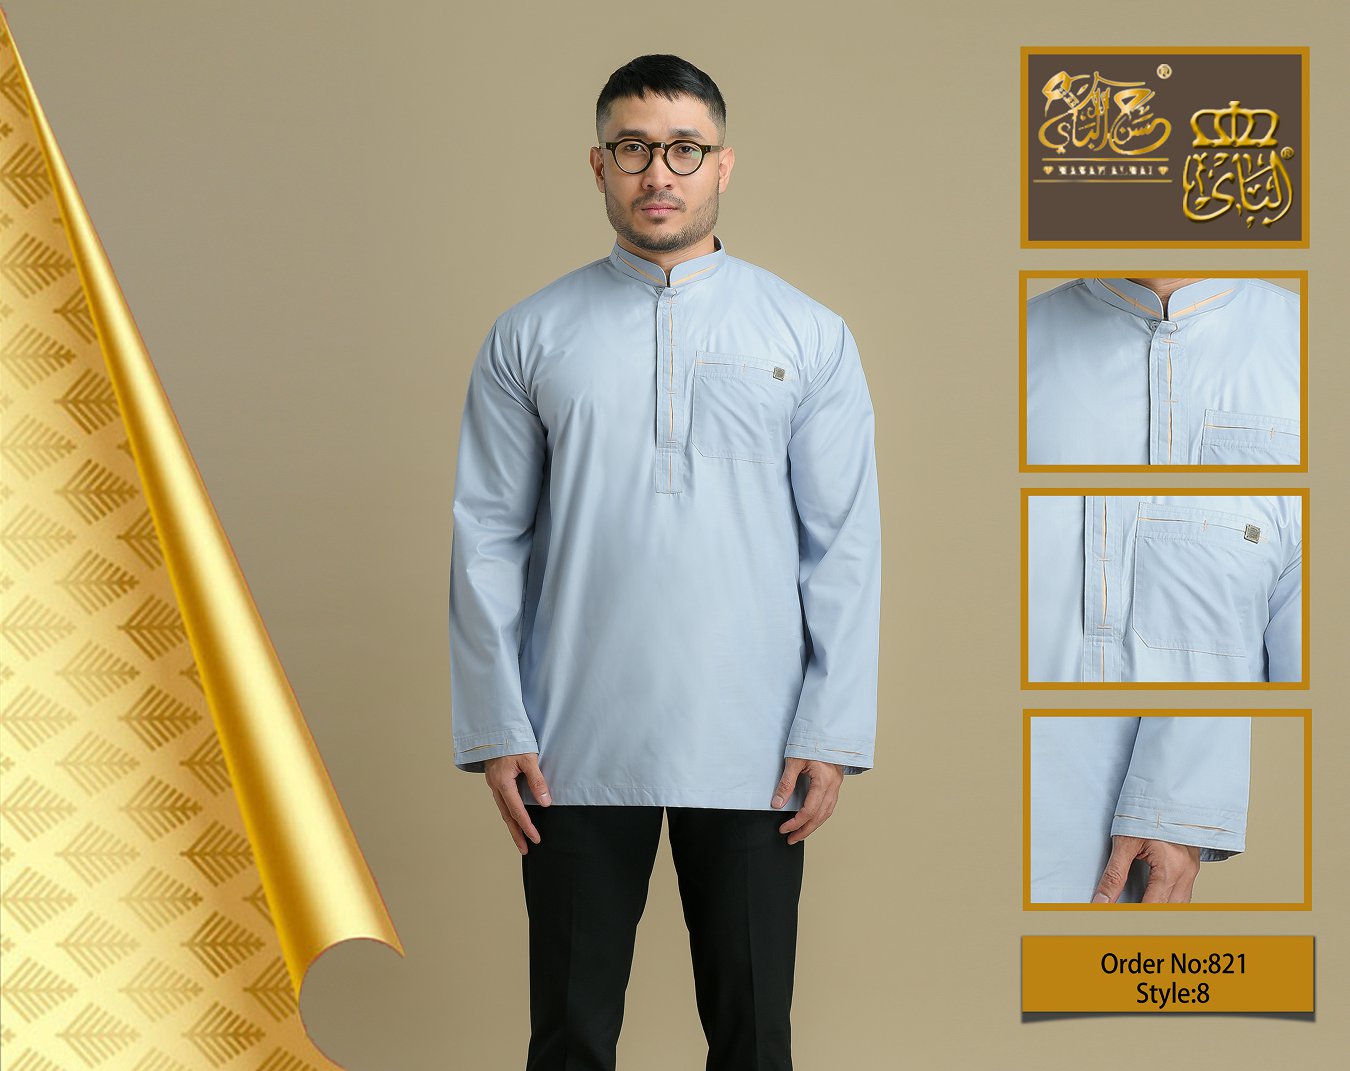 Malay clothing54